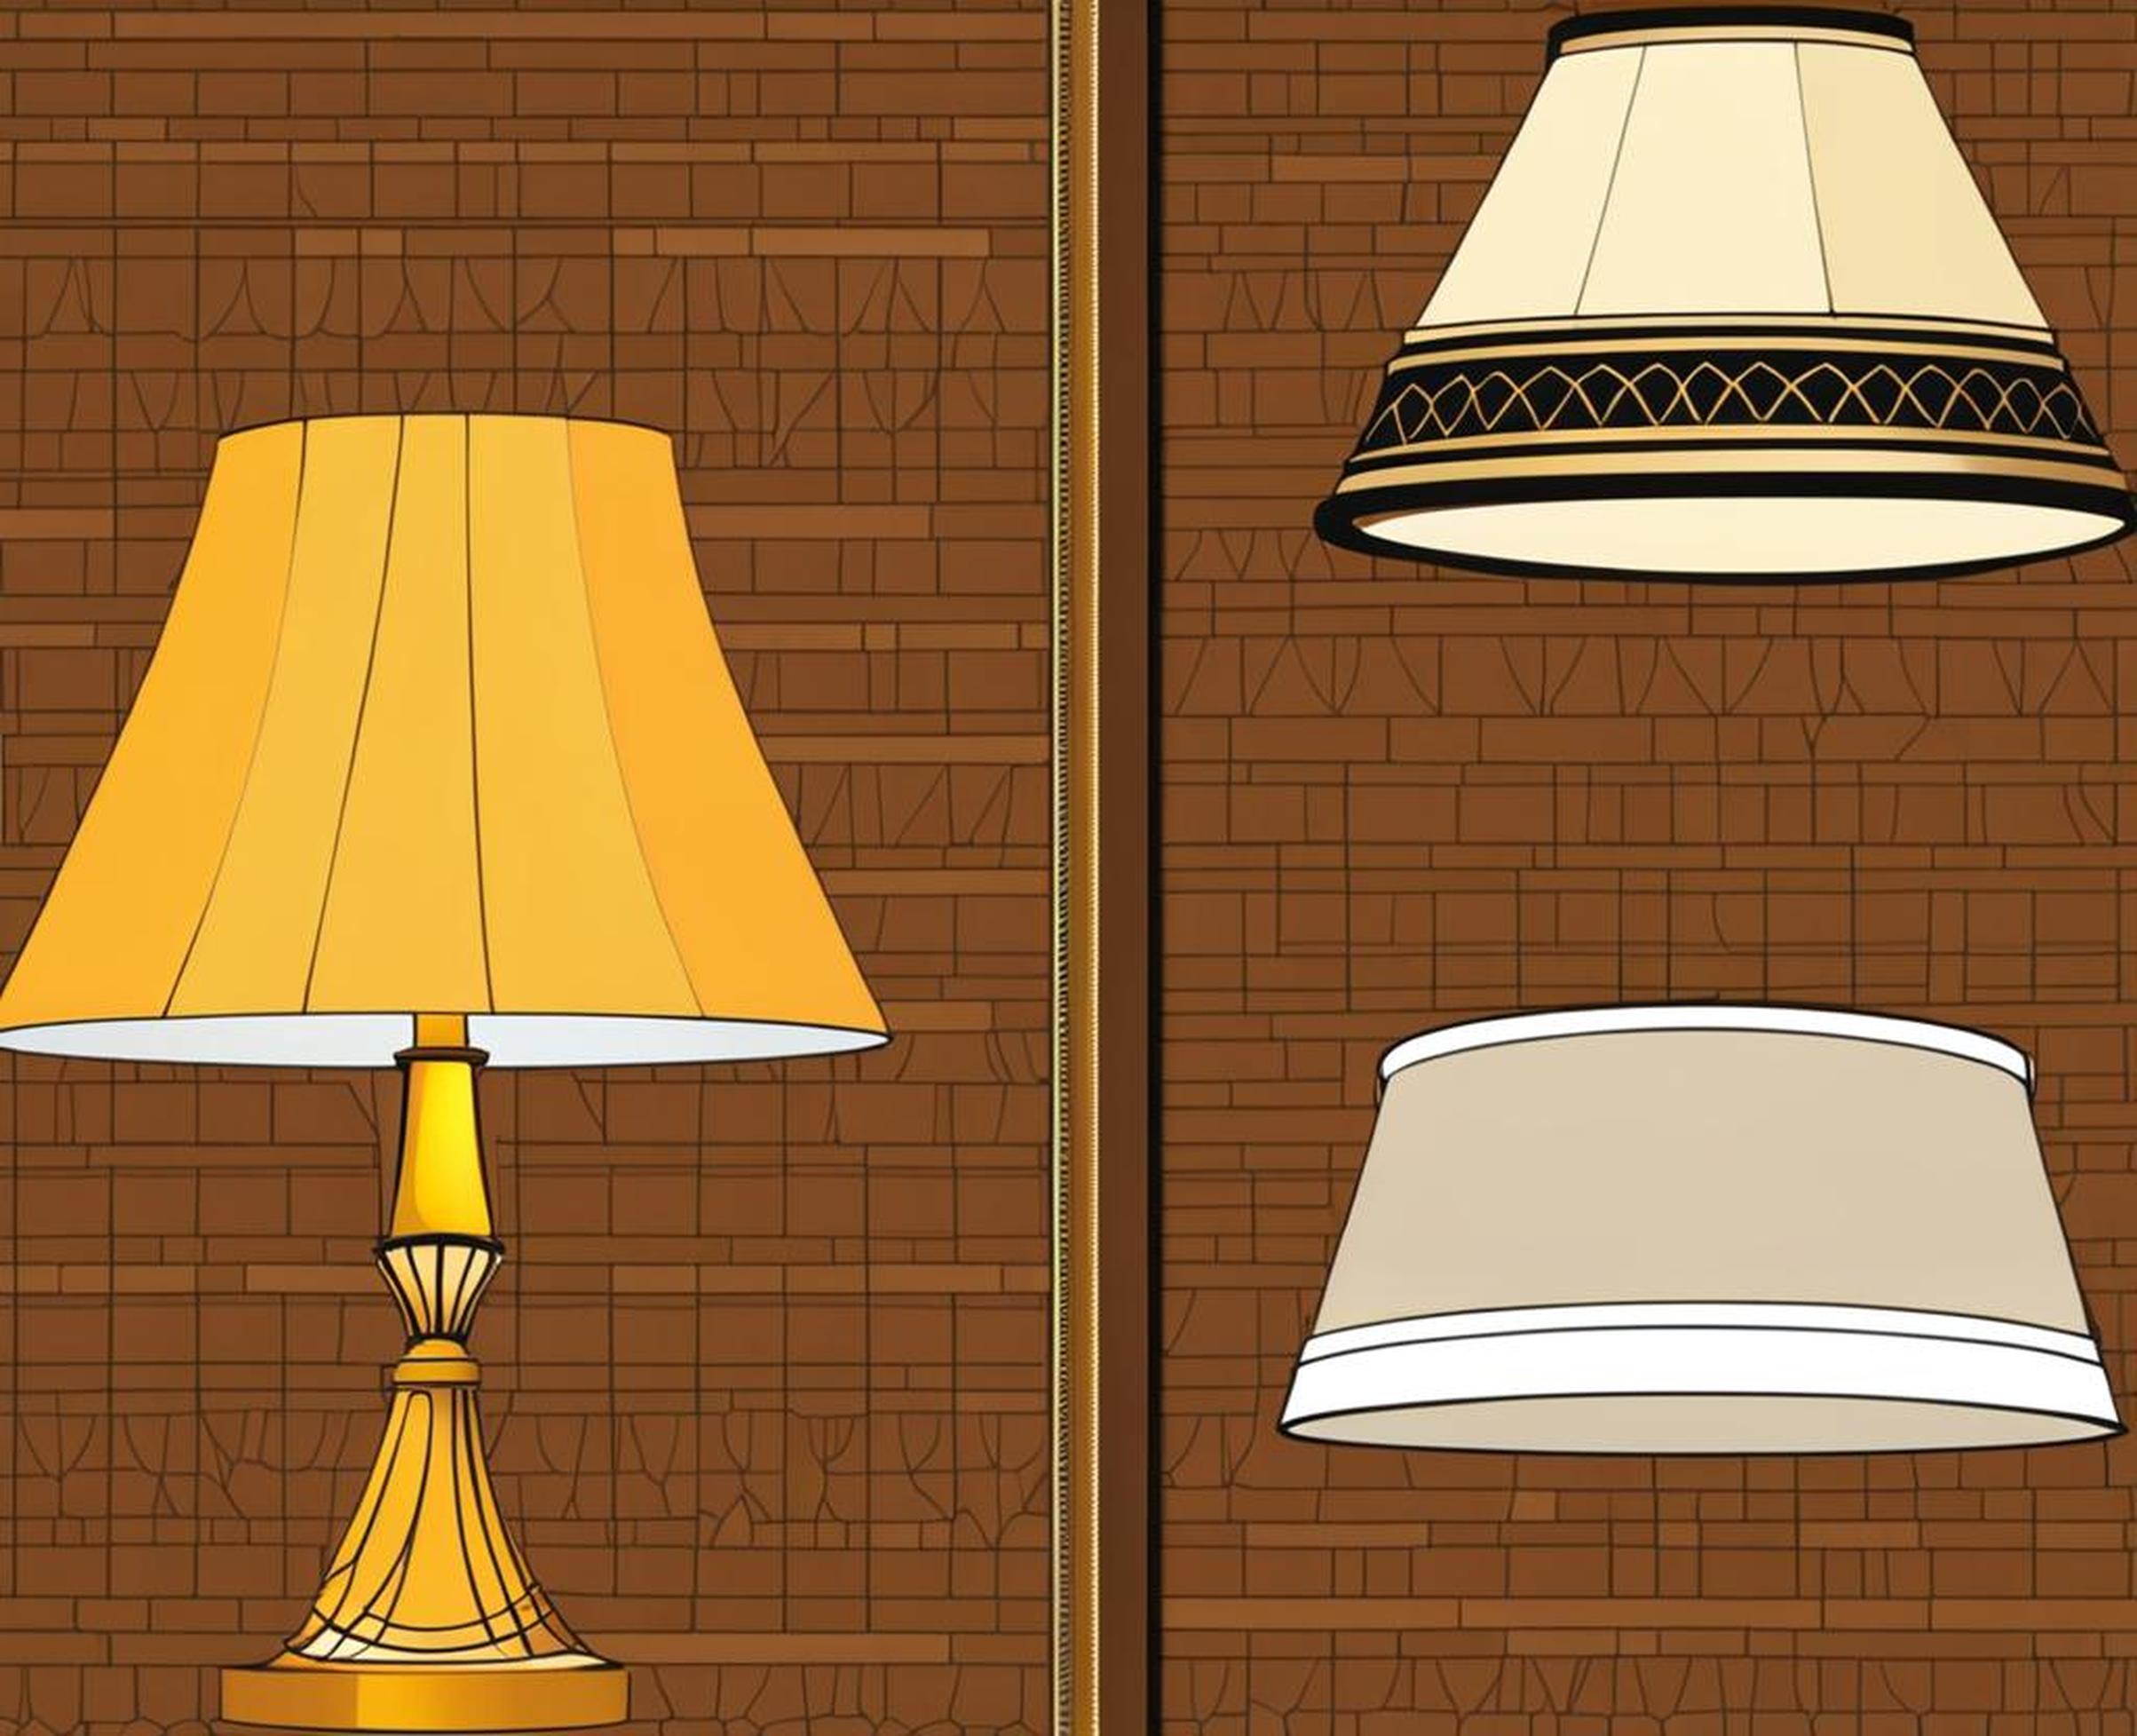 lamp shade styles and shapes